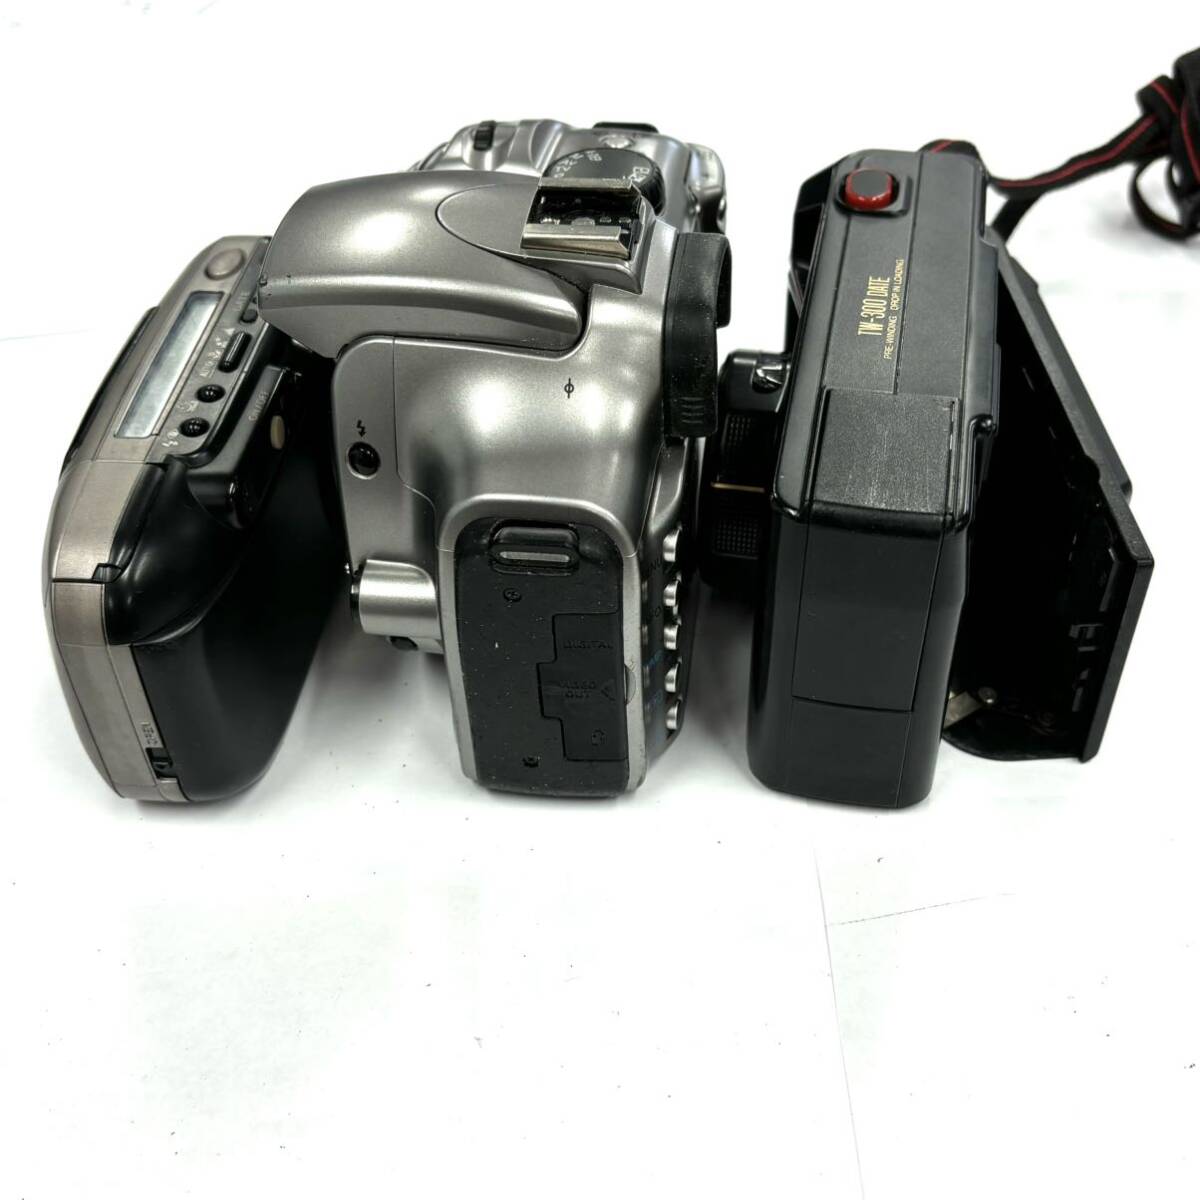 H2906 カメラ まとめ フィルムカメラ デジタルカメラ Canon キヤノン EOS Kiss DS6041 FUJI TW-300 DATE MINOLTA ミノルタ Capios25 中古_画像5